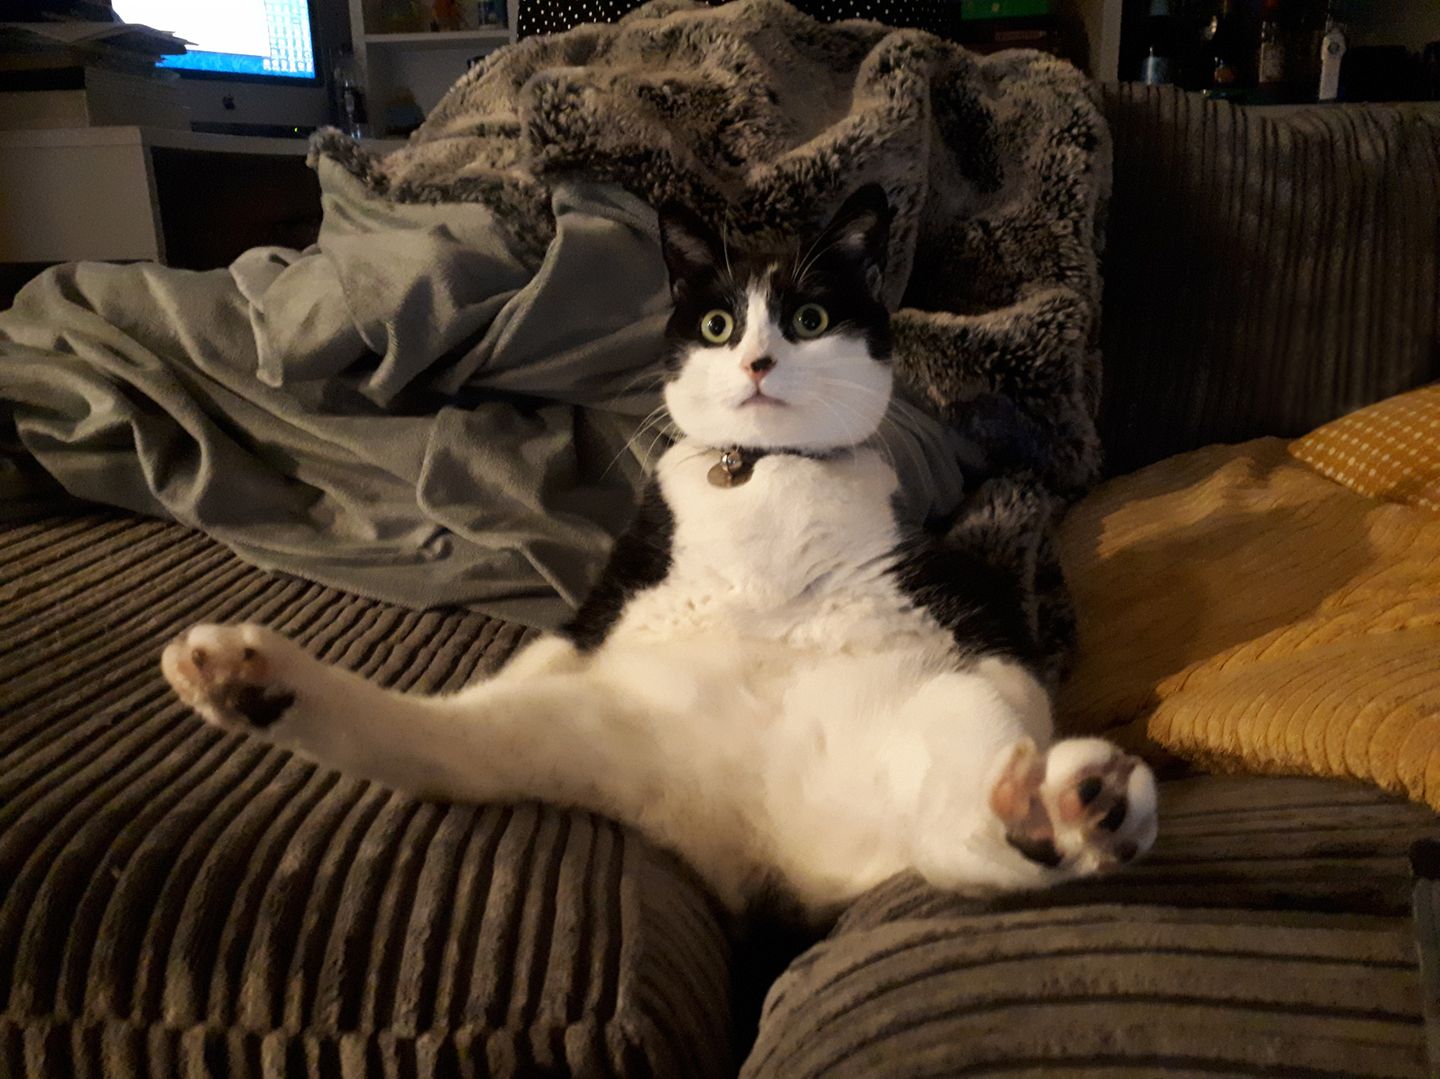 Comedy Pet Photo Award 2021: Katze sitzt auf Couch